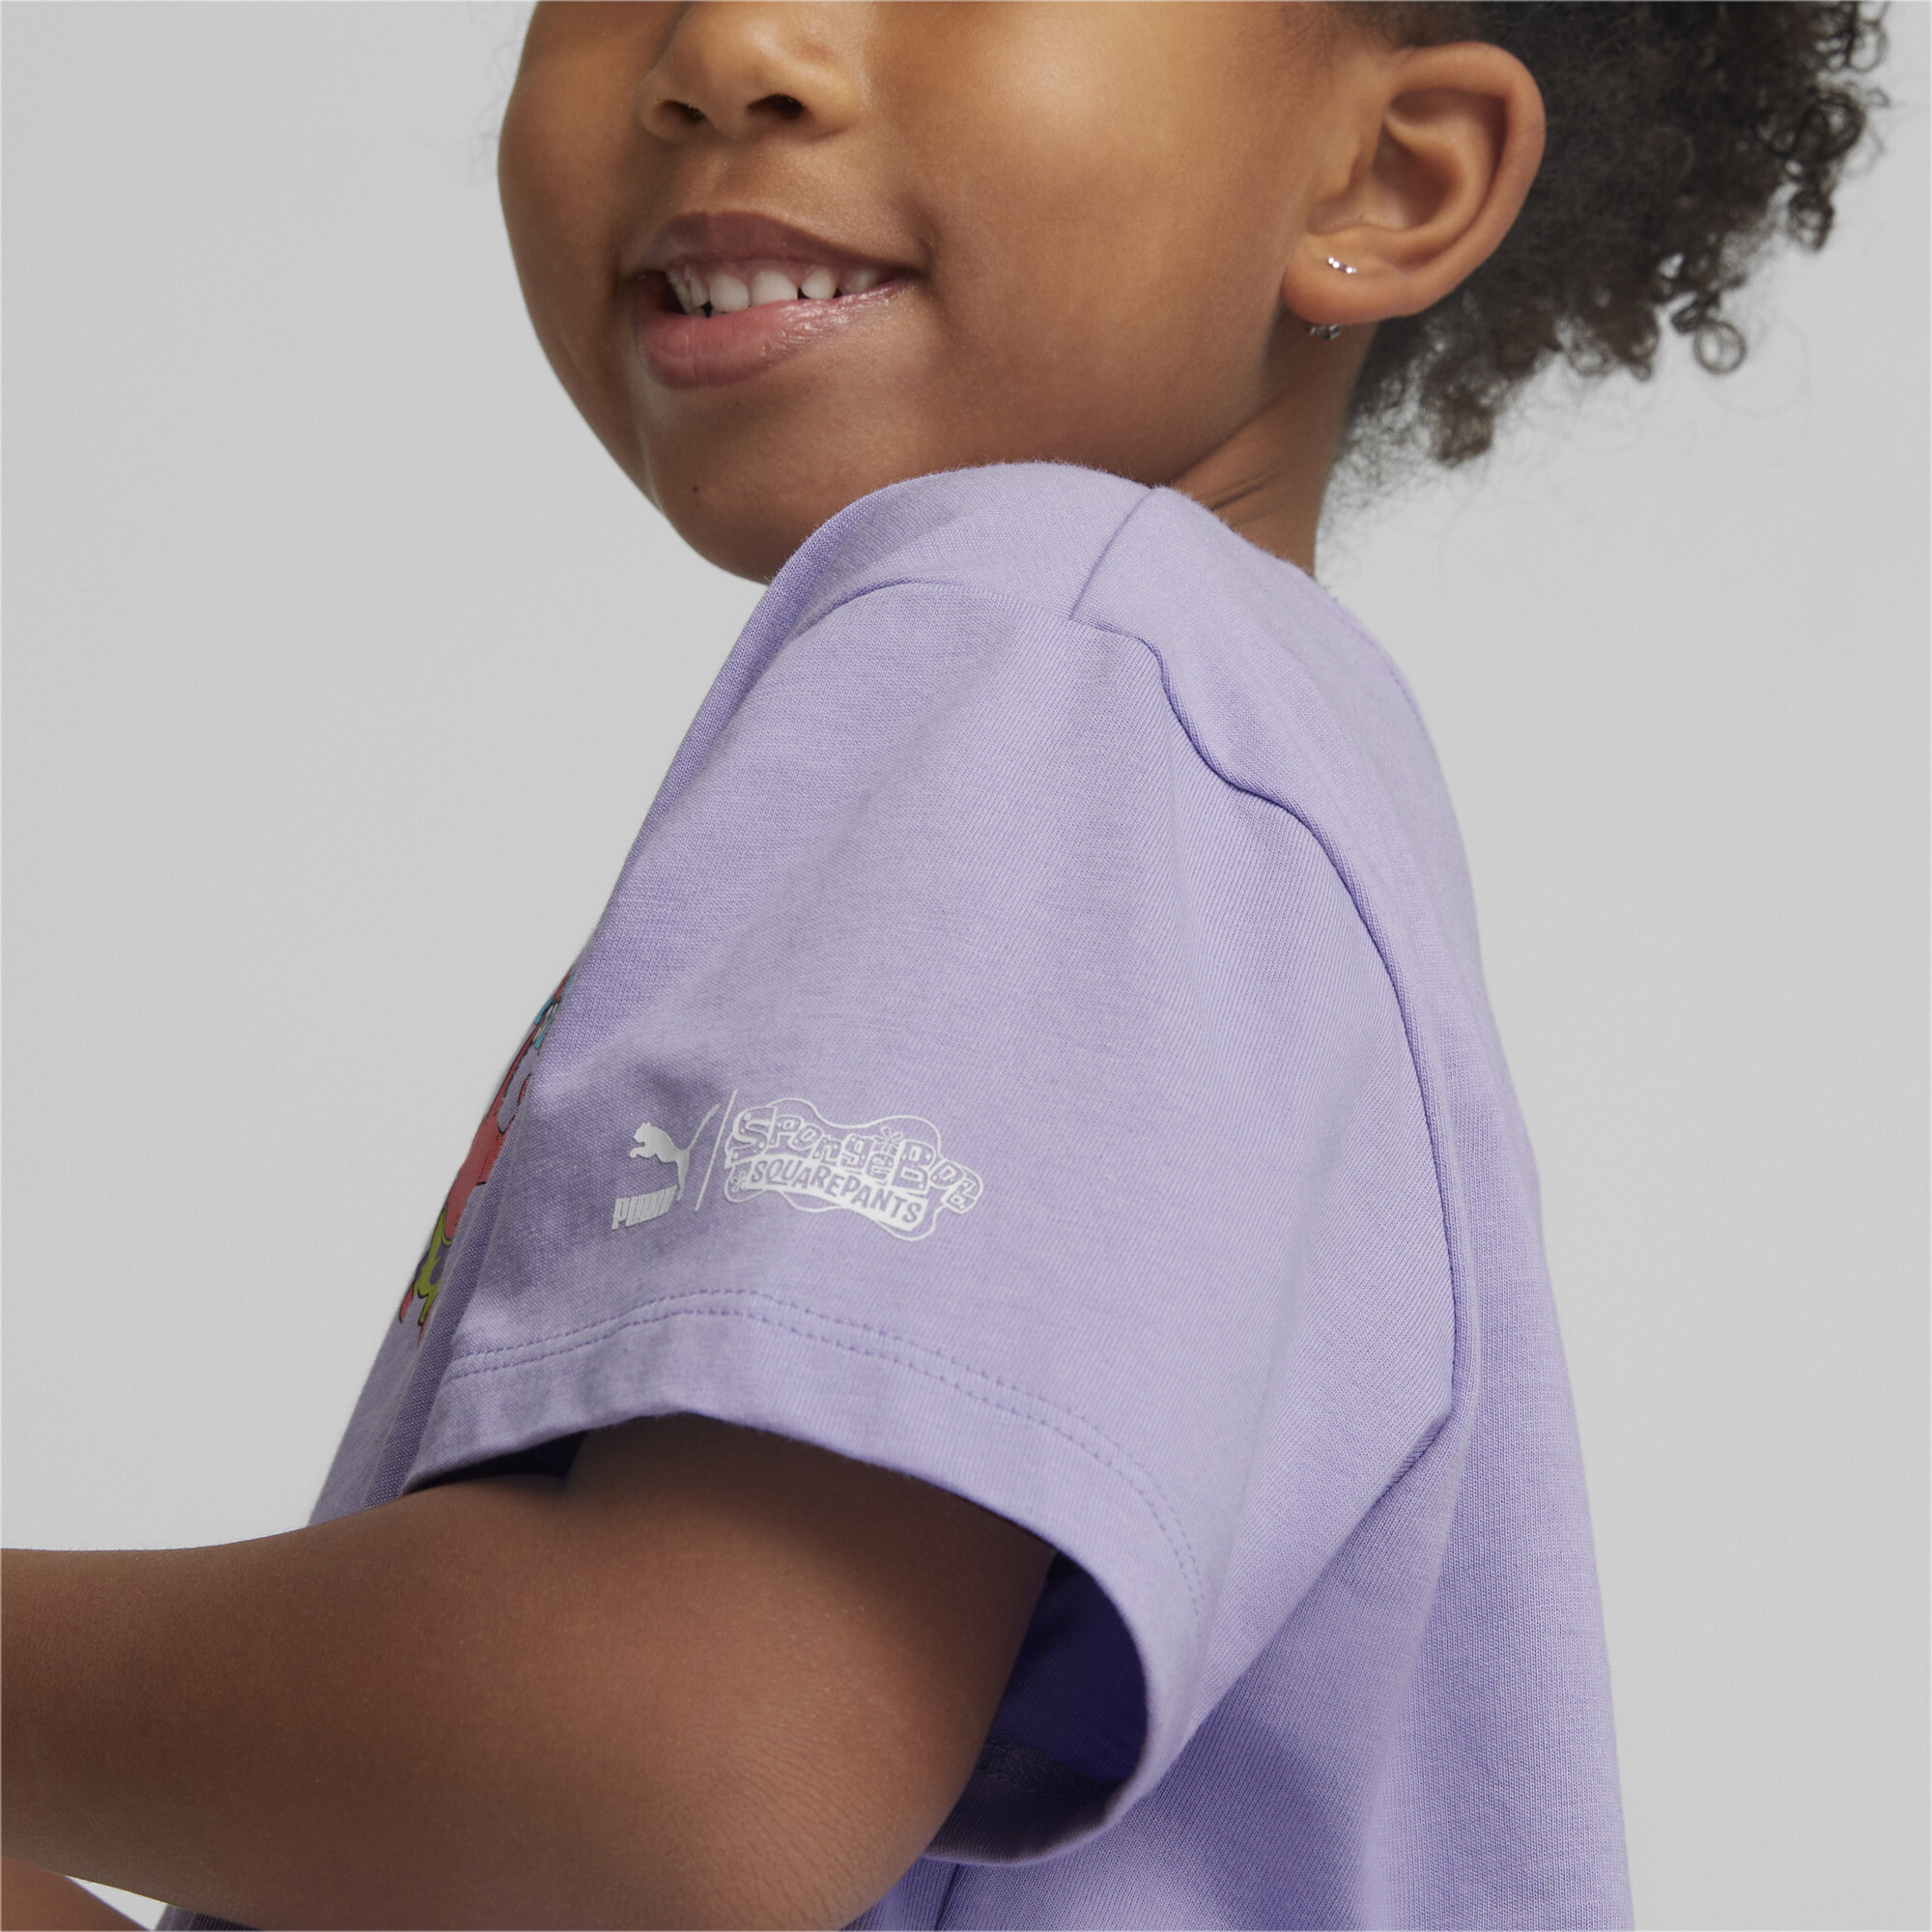 PUMA X SPONGEBOB T-Shirt Kids In Purple, Size 7-8 Youth